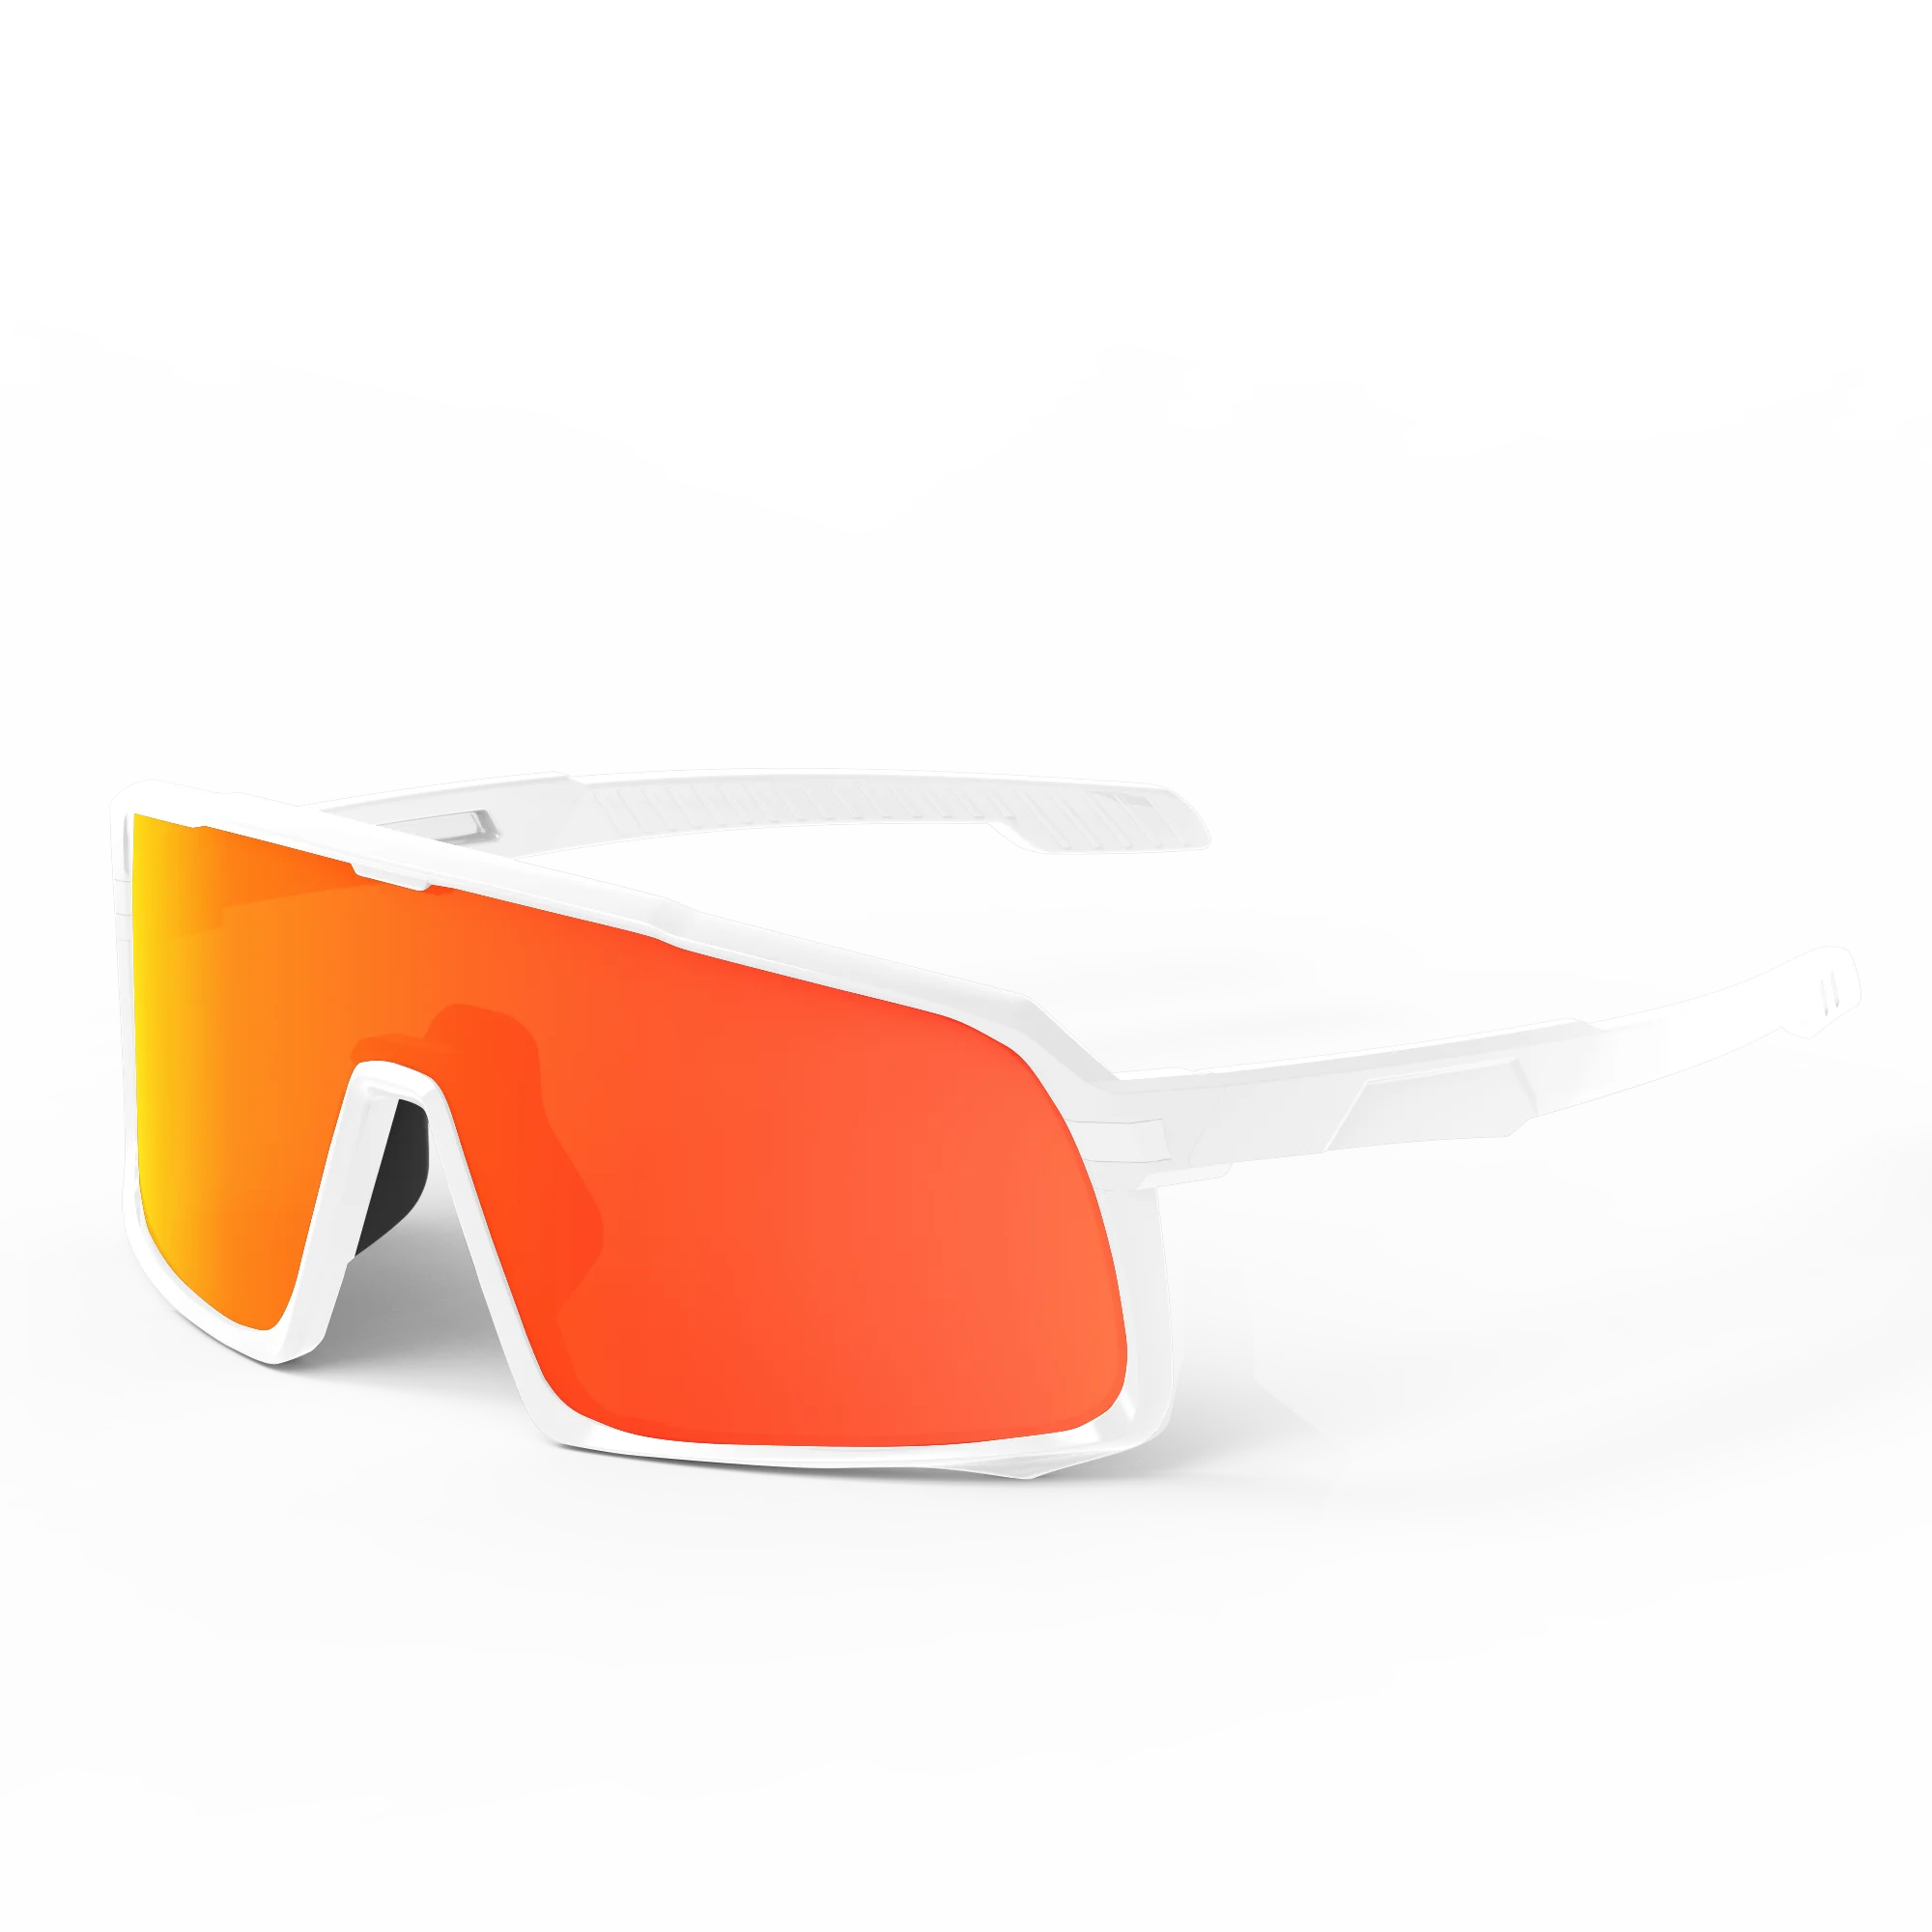 SUNOK polarized sport sunglasses anti UV